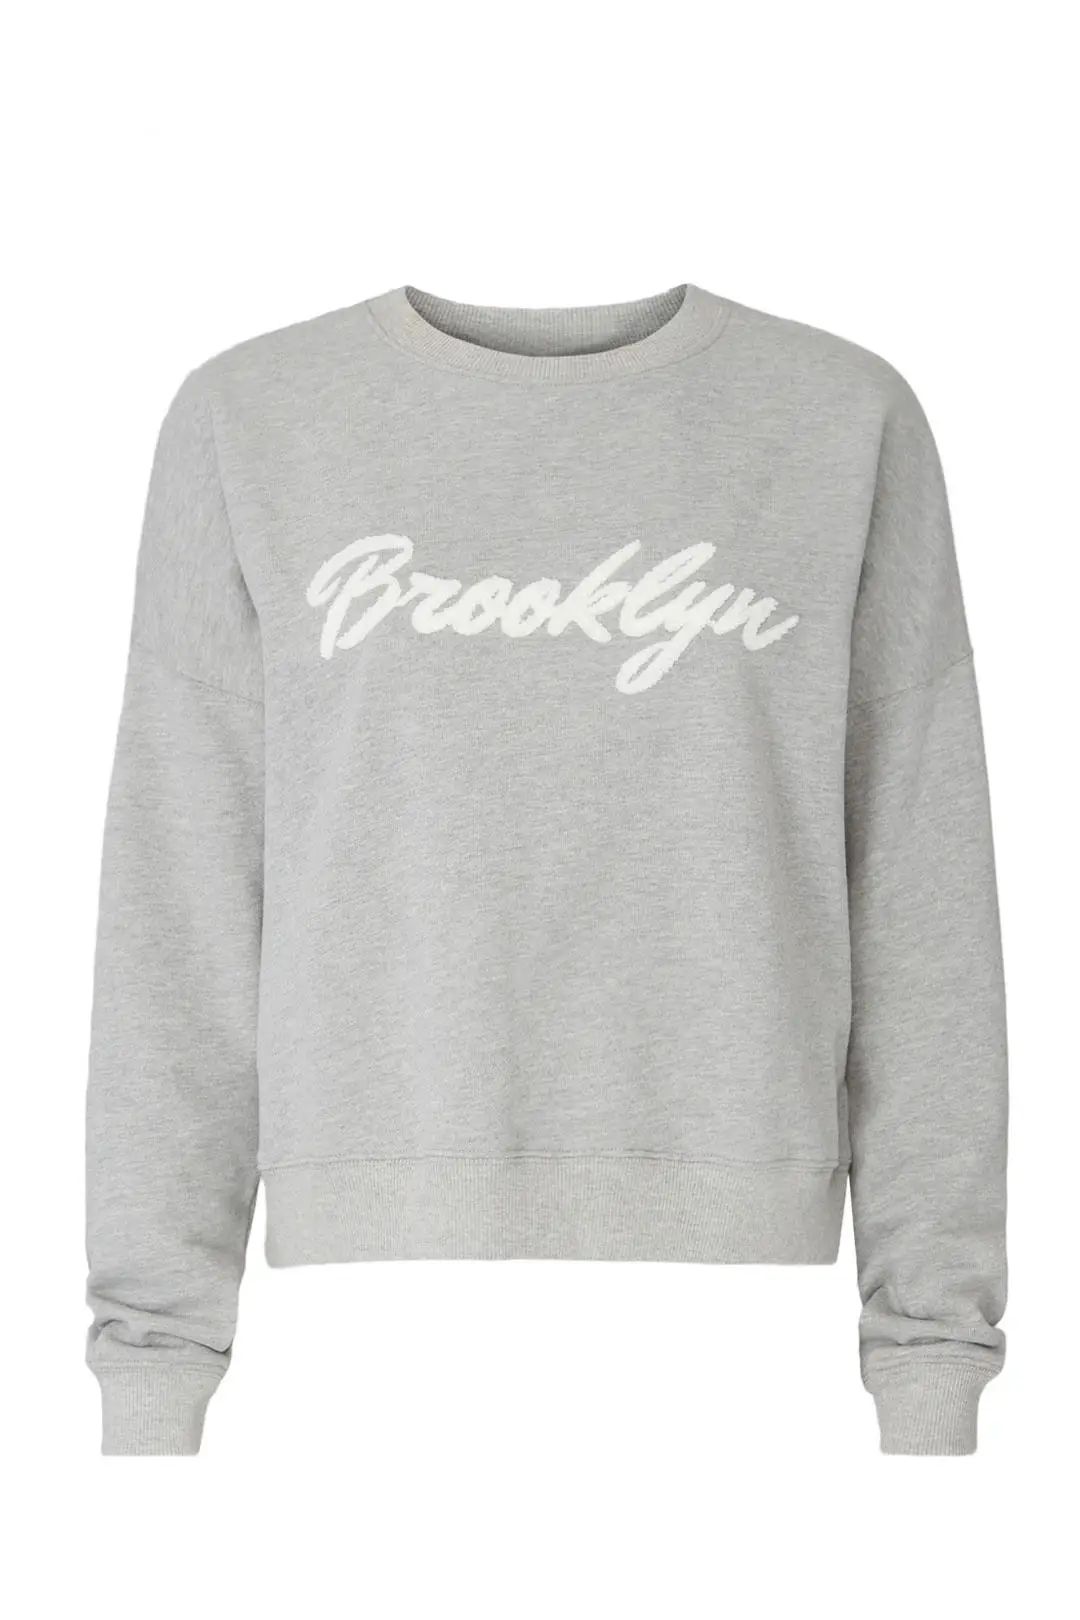 Brooklyn Borough Sweatshirt | Rent The Runway